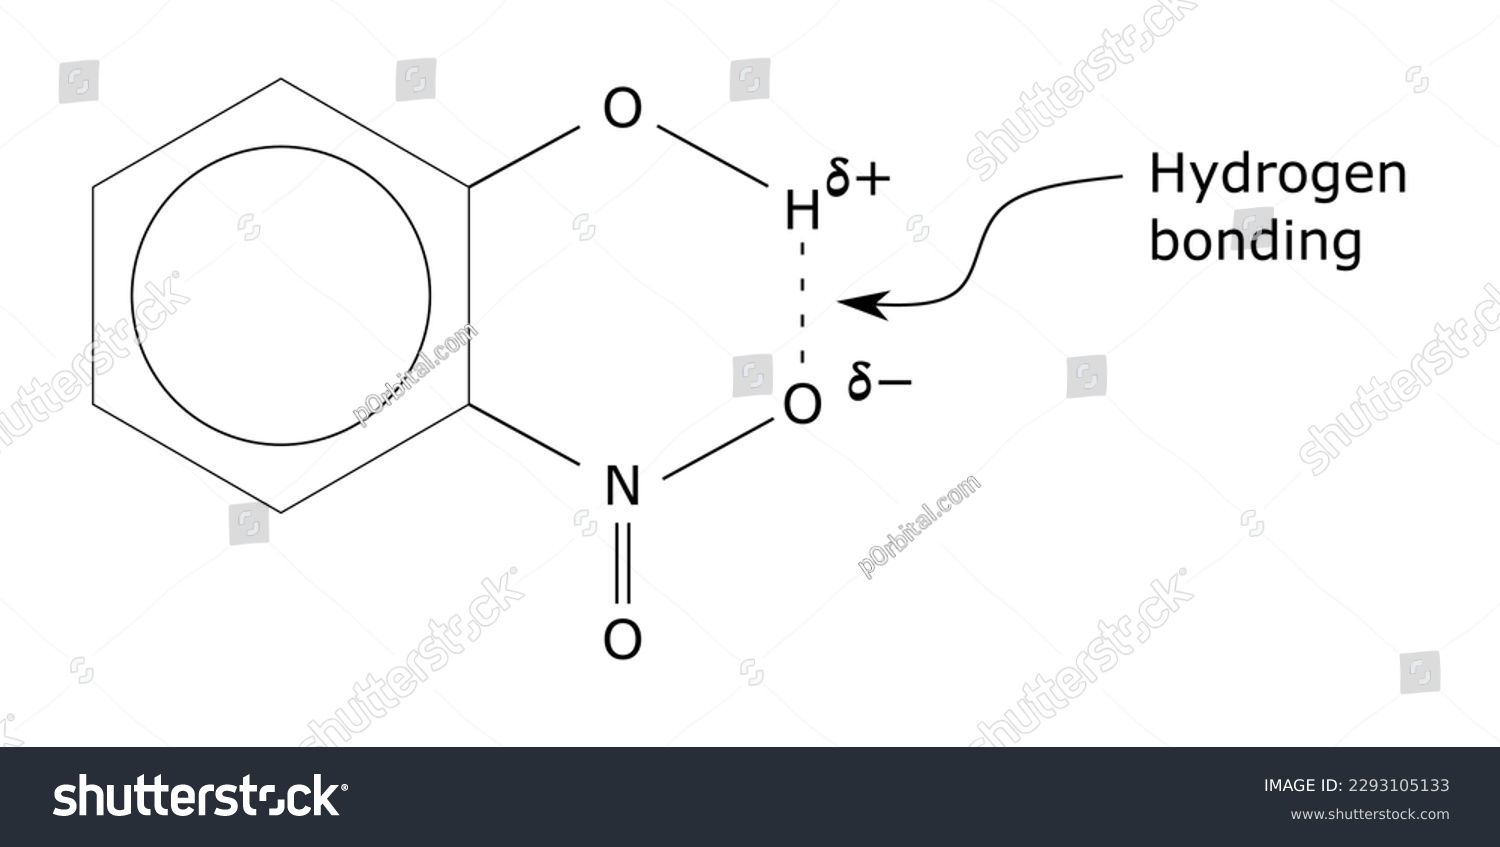 SVG of Aromatic chemical compound hydrogen bonding h bond nitrogen phenol oxygen nitro ortho intramolecular benzene ring partial positive negative charge structure organic chemistry vector svg